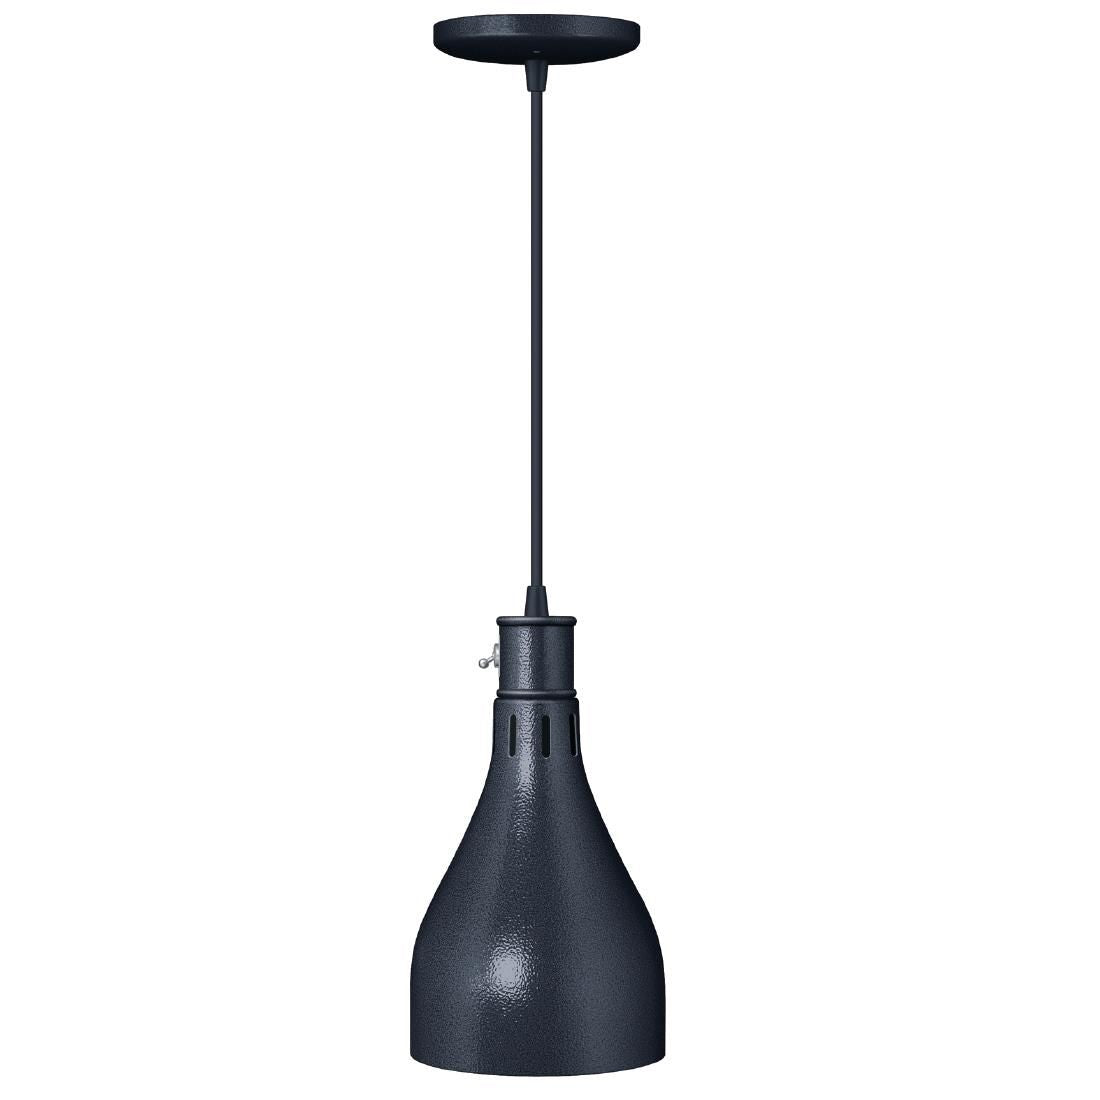 Hatco Heat Lamp Black Bell Shaped JD Catering Equipment Solutions Ltd